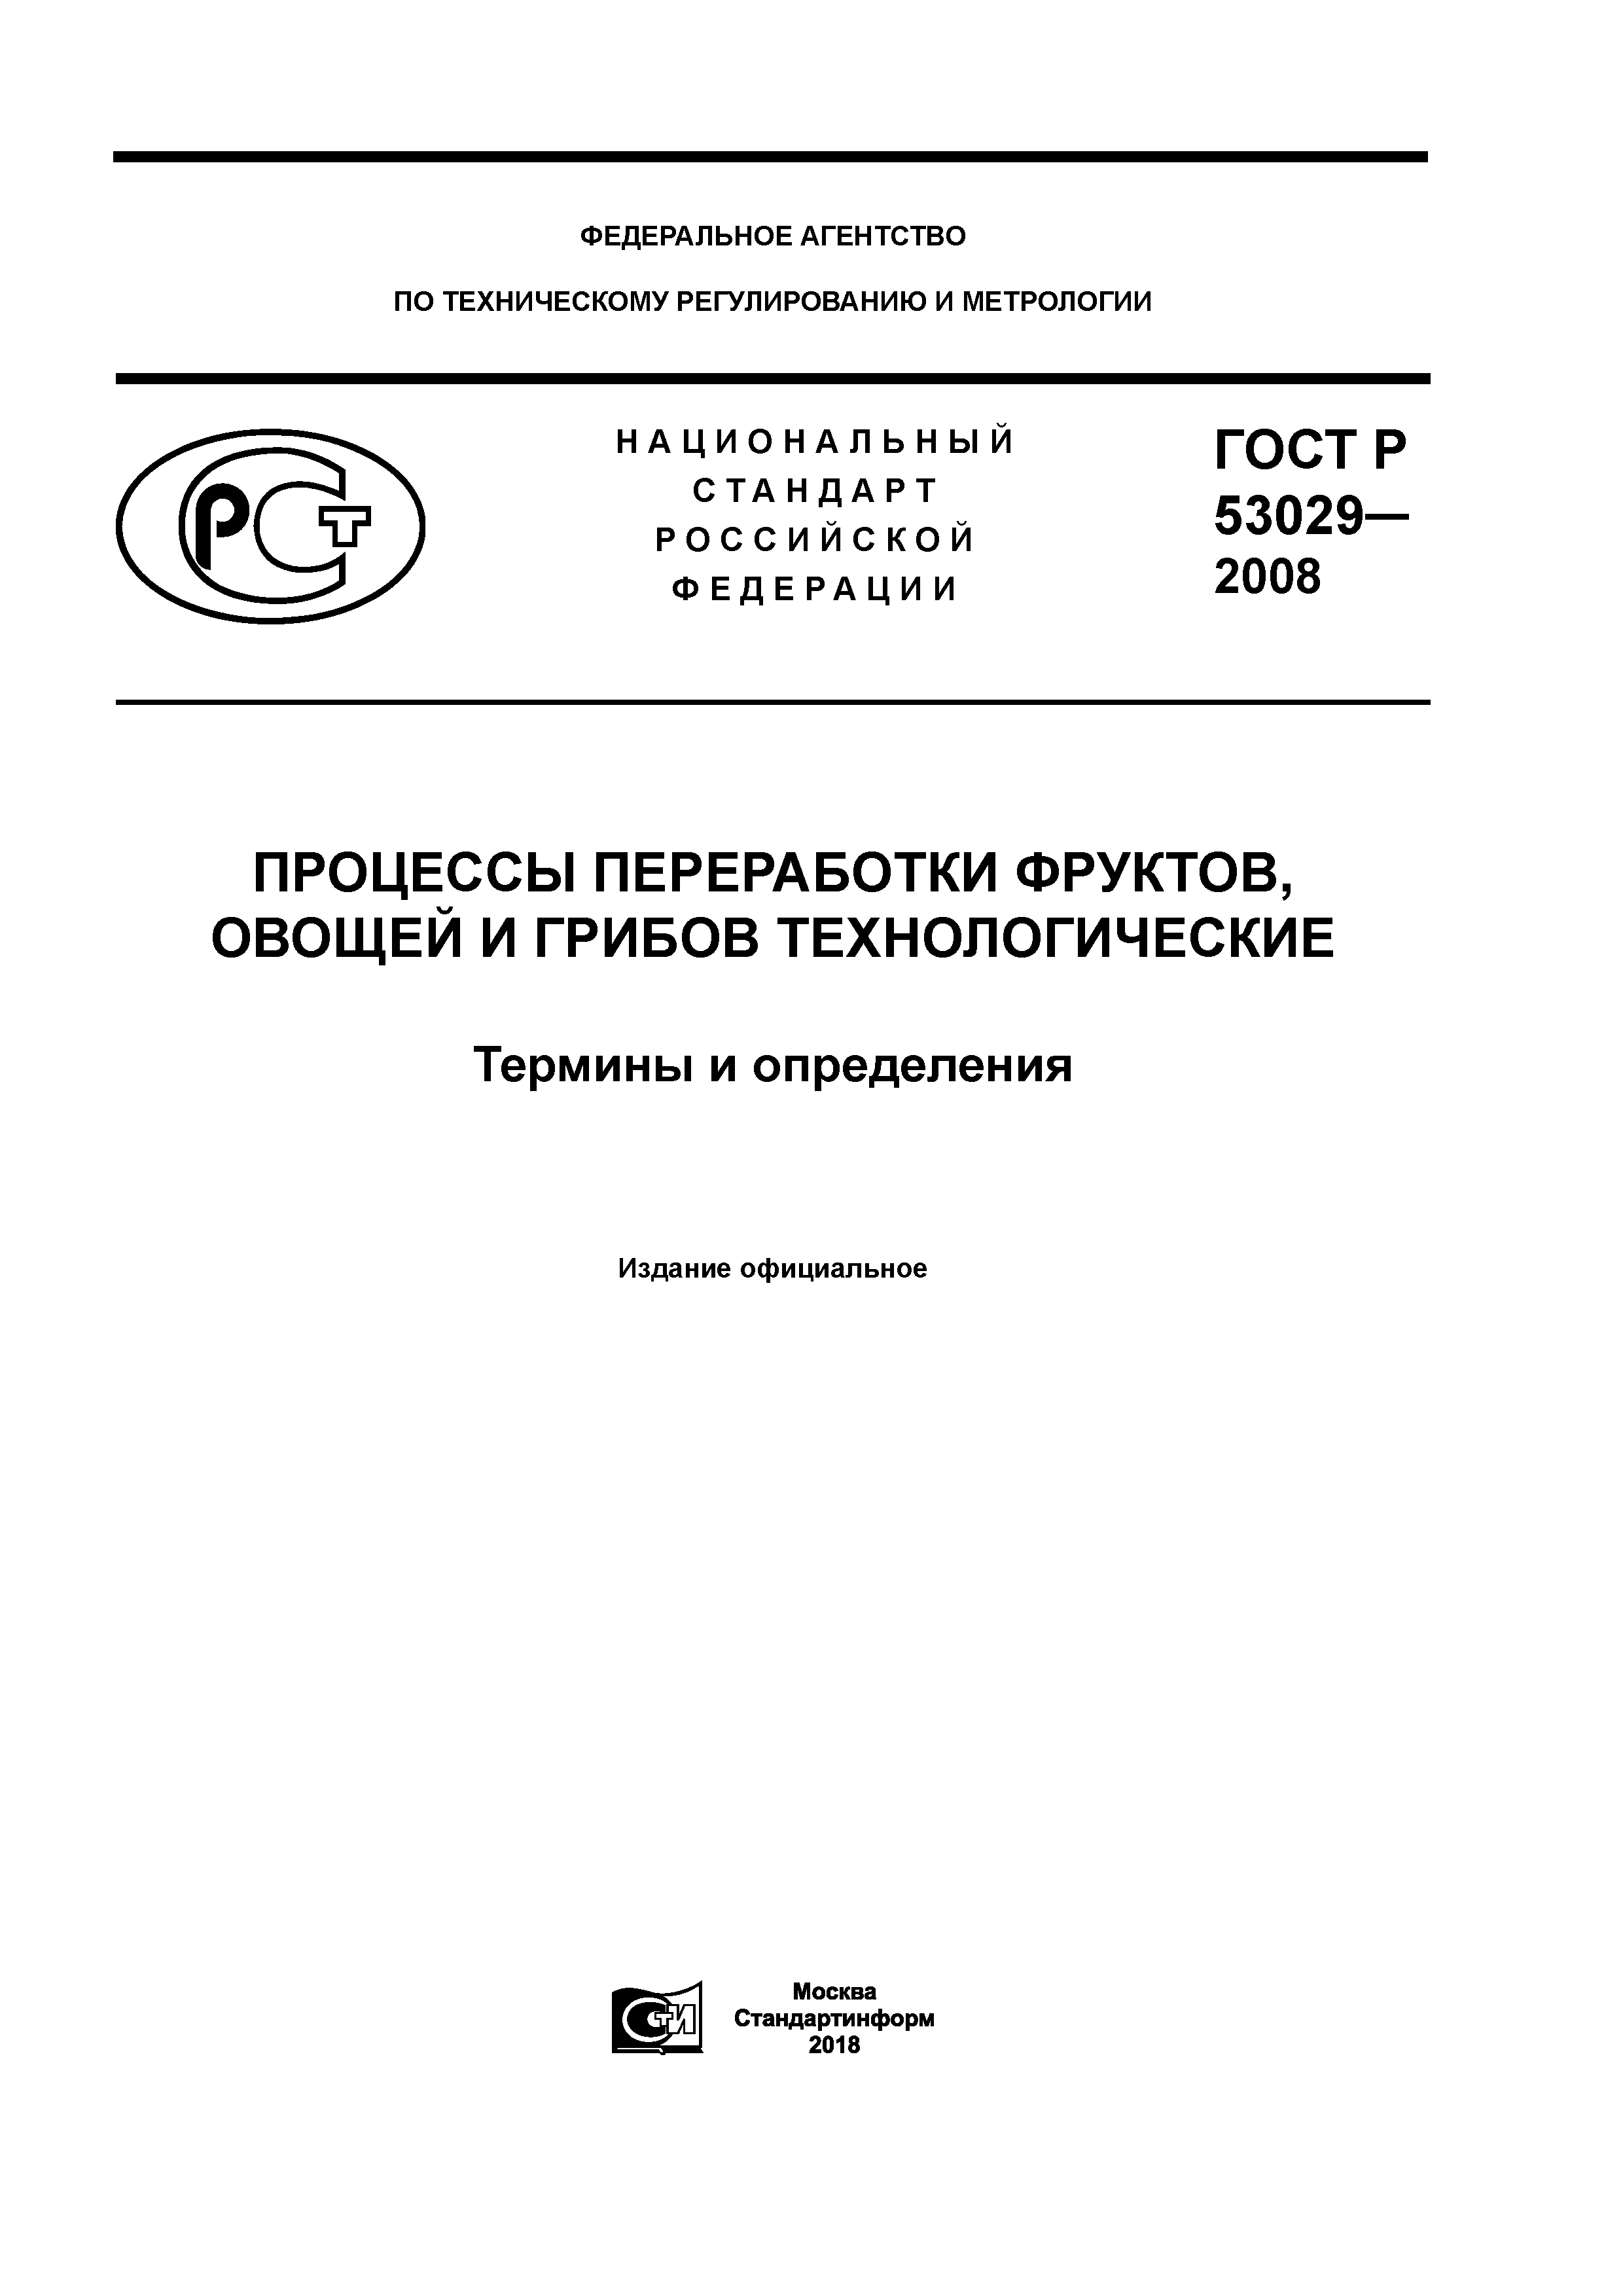 ГОСТ Р 53029-2008